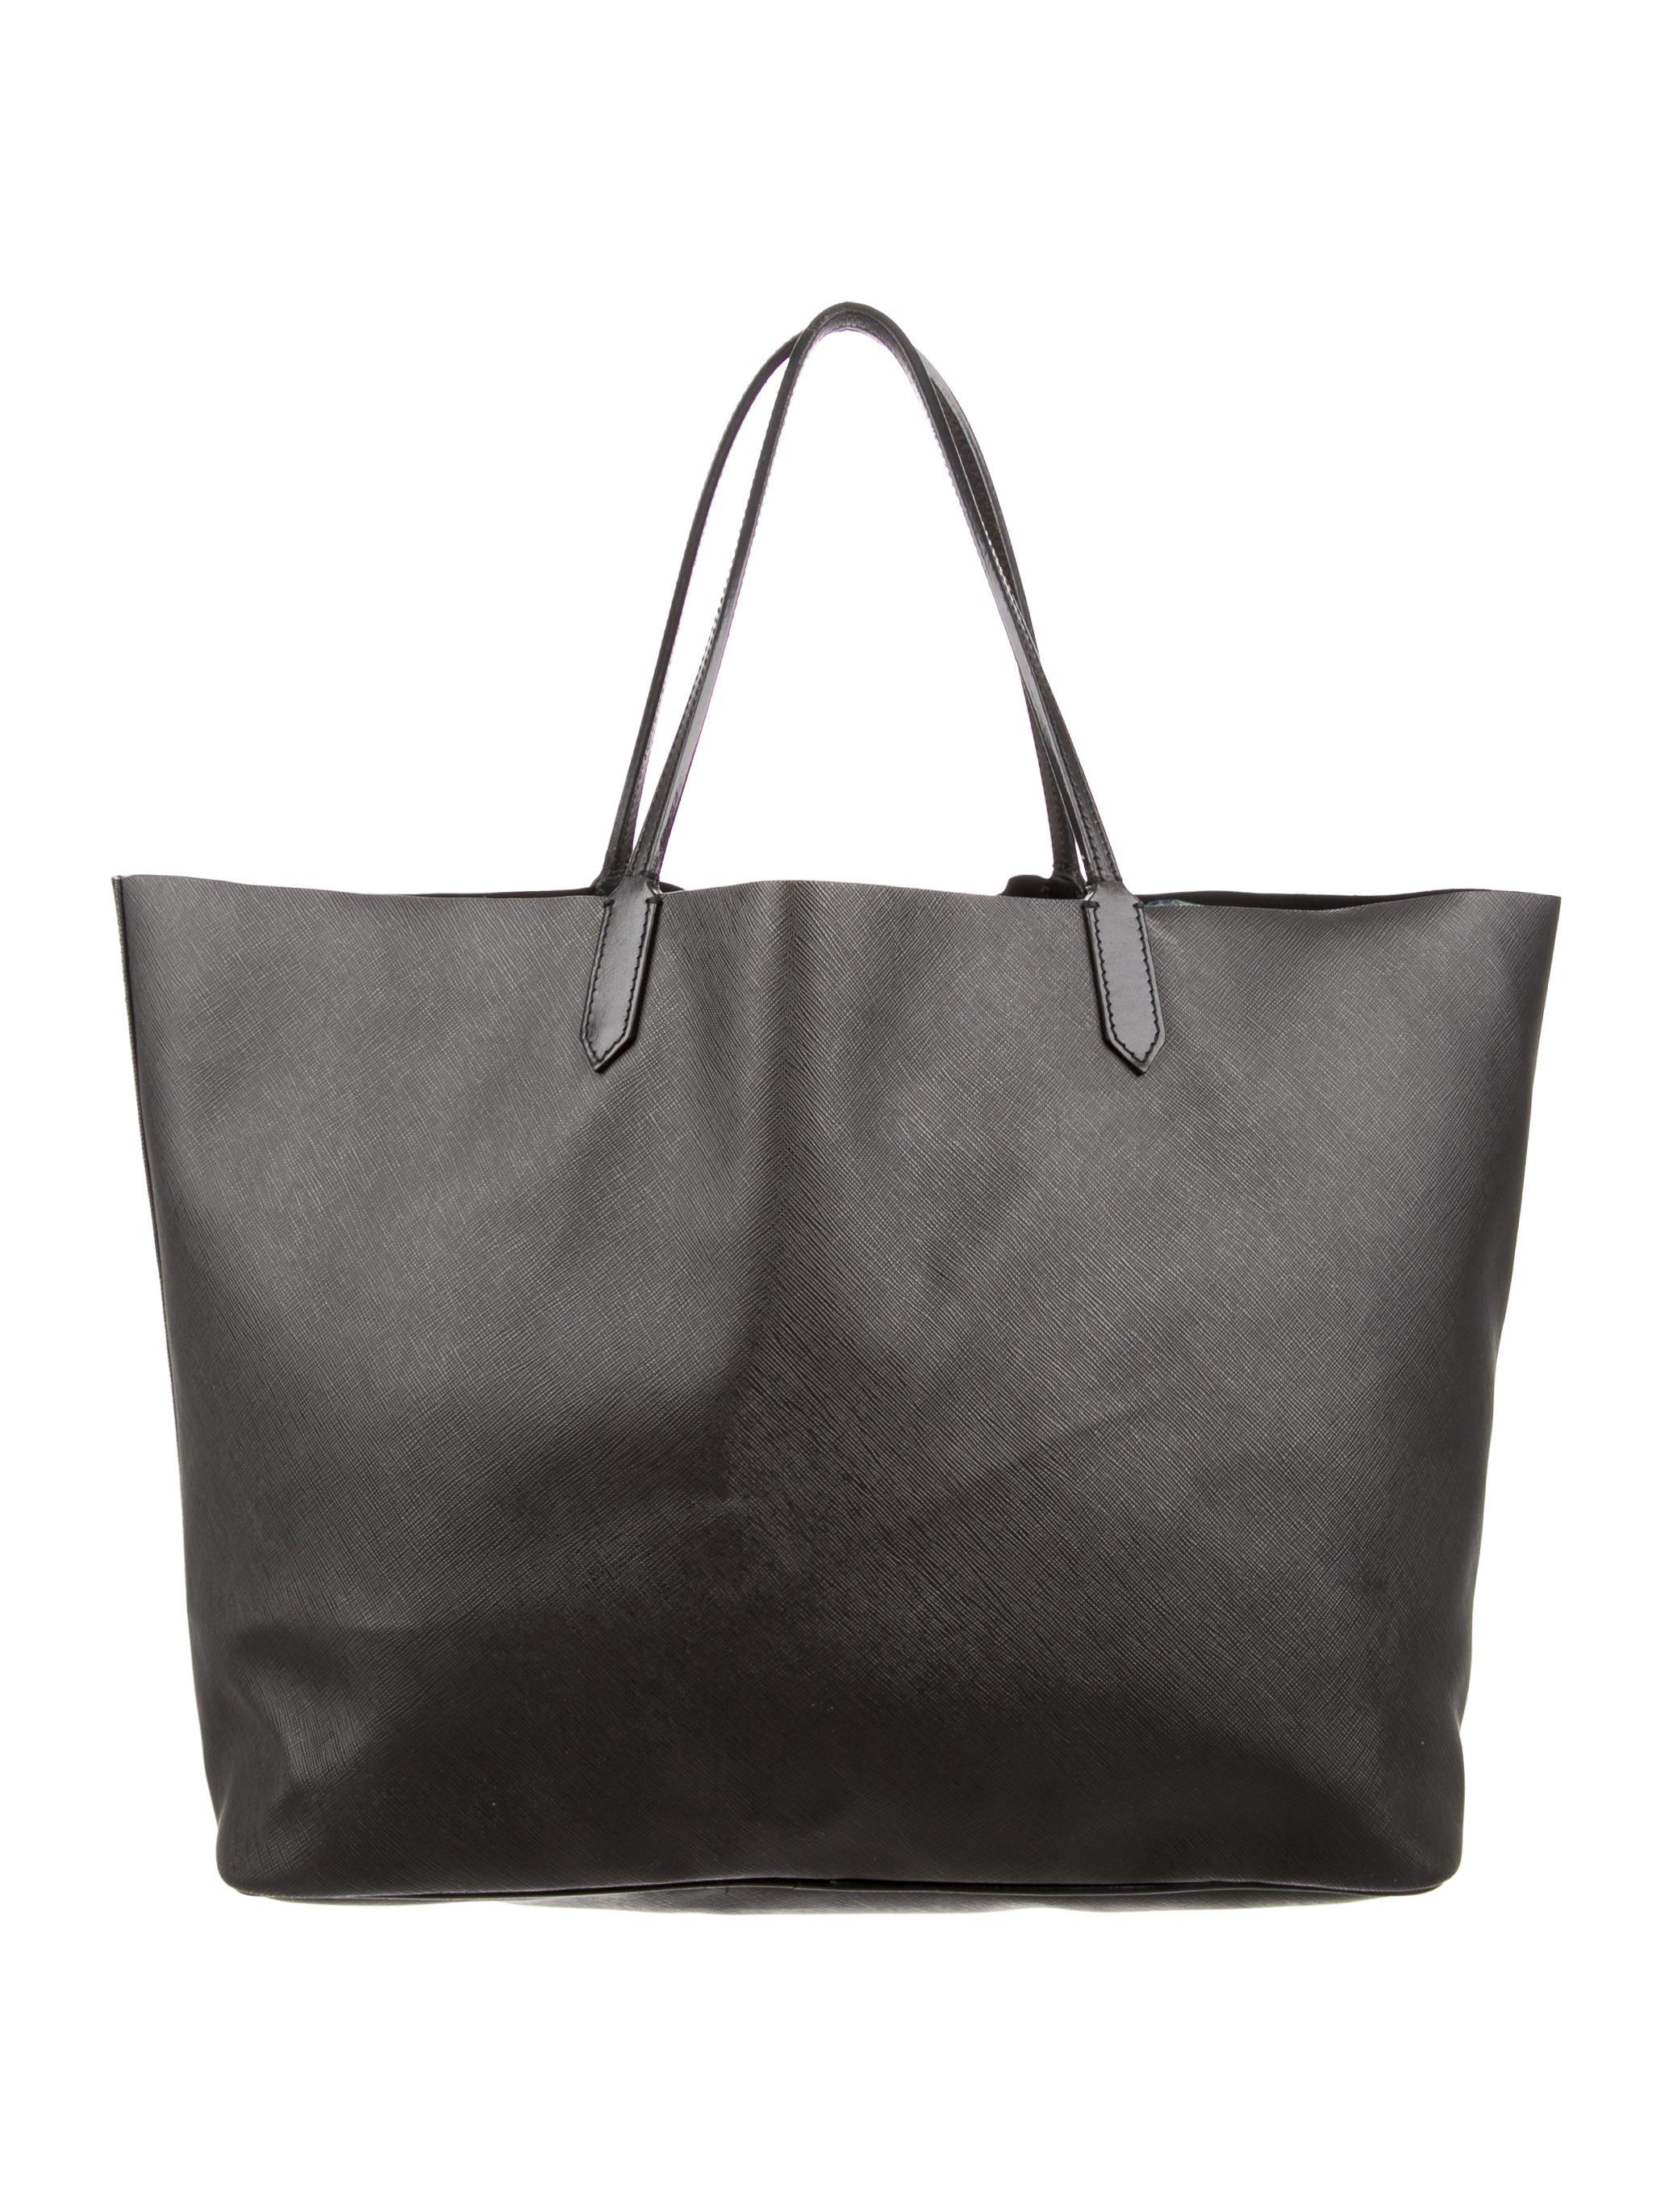 Givenchy Antigona Medium Shopping Tote in Black | Lyst